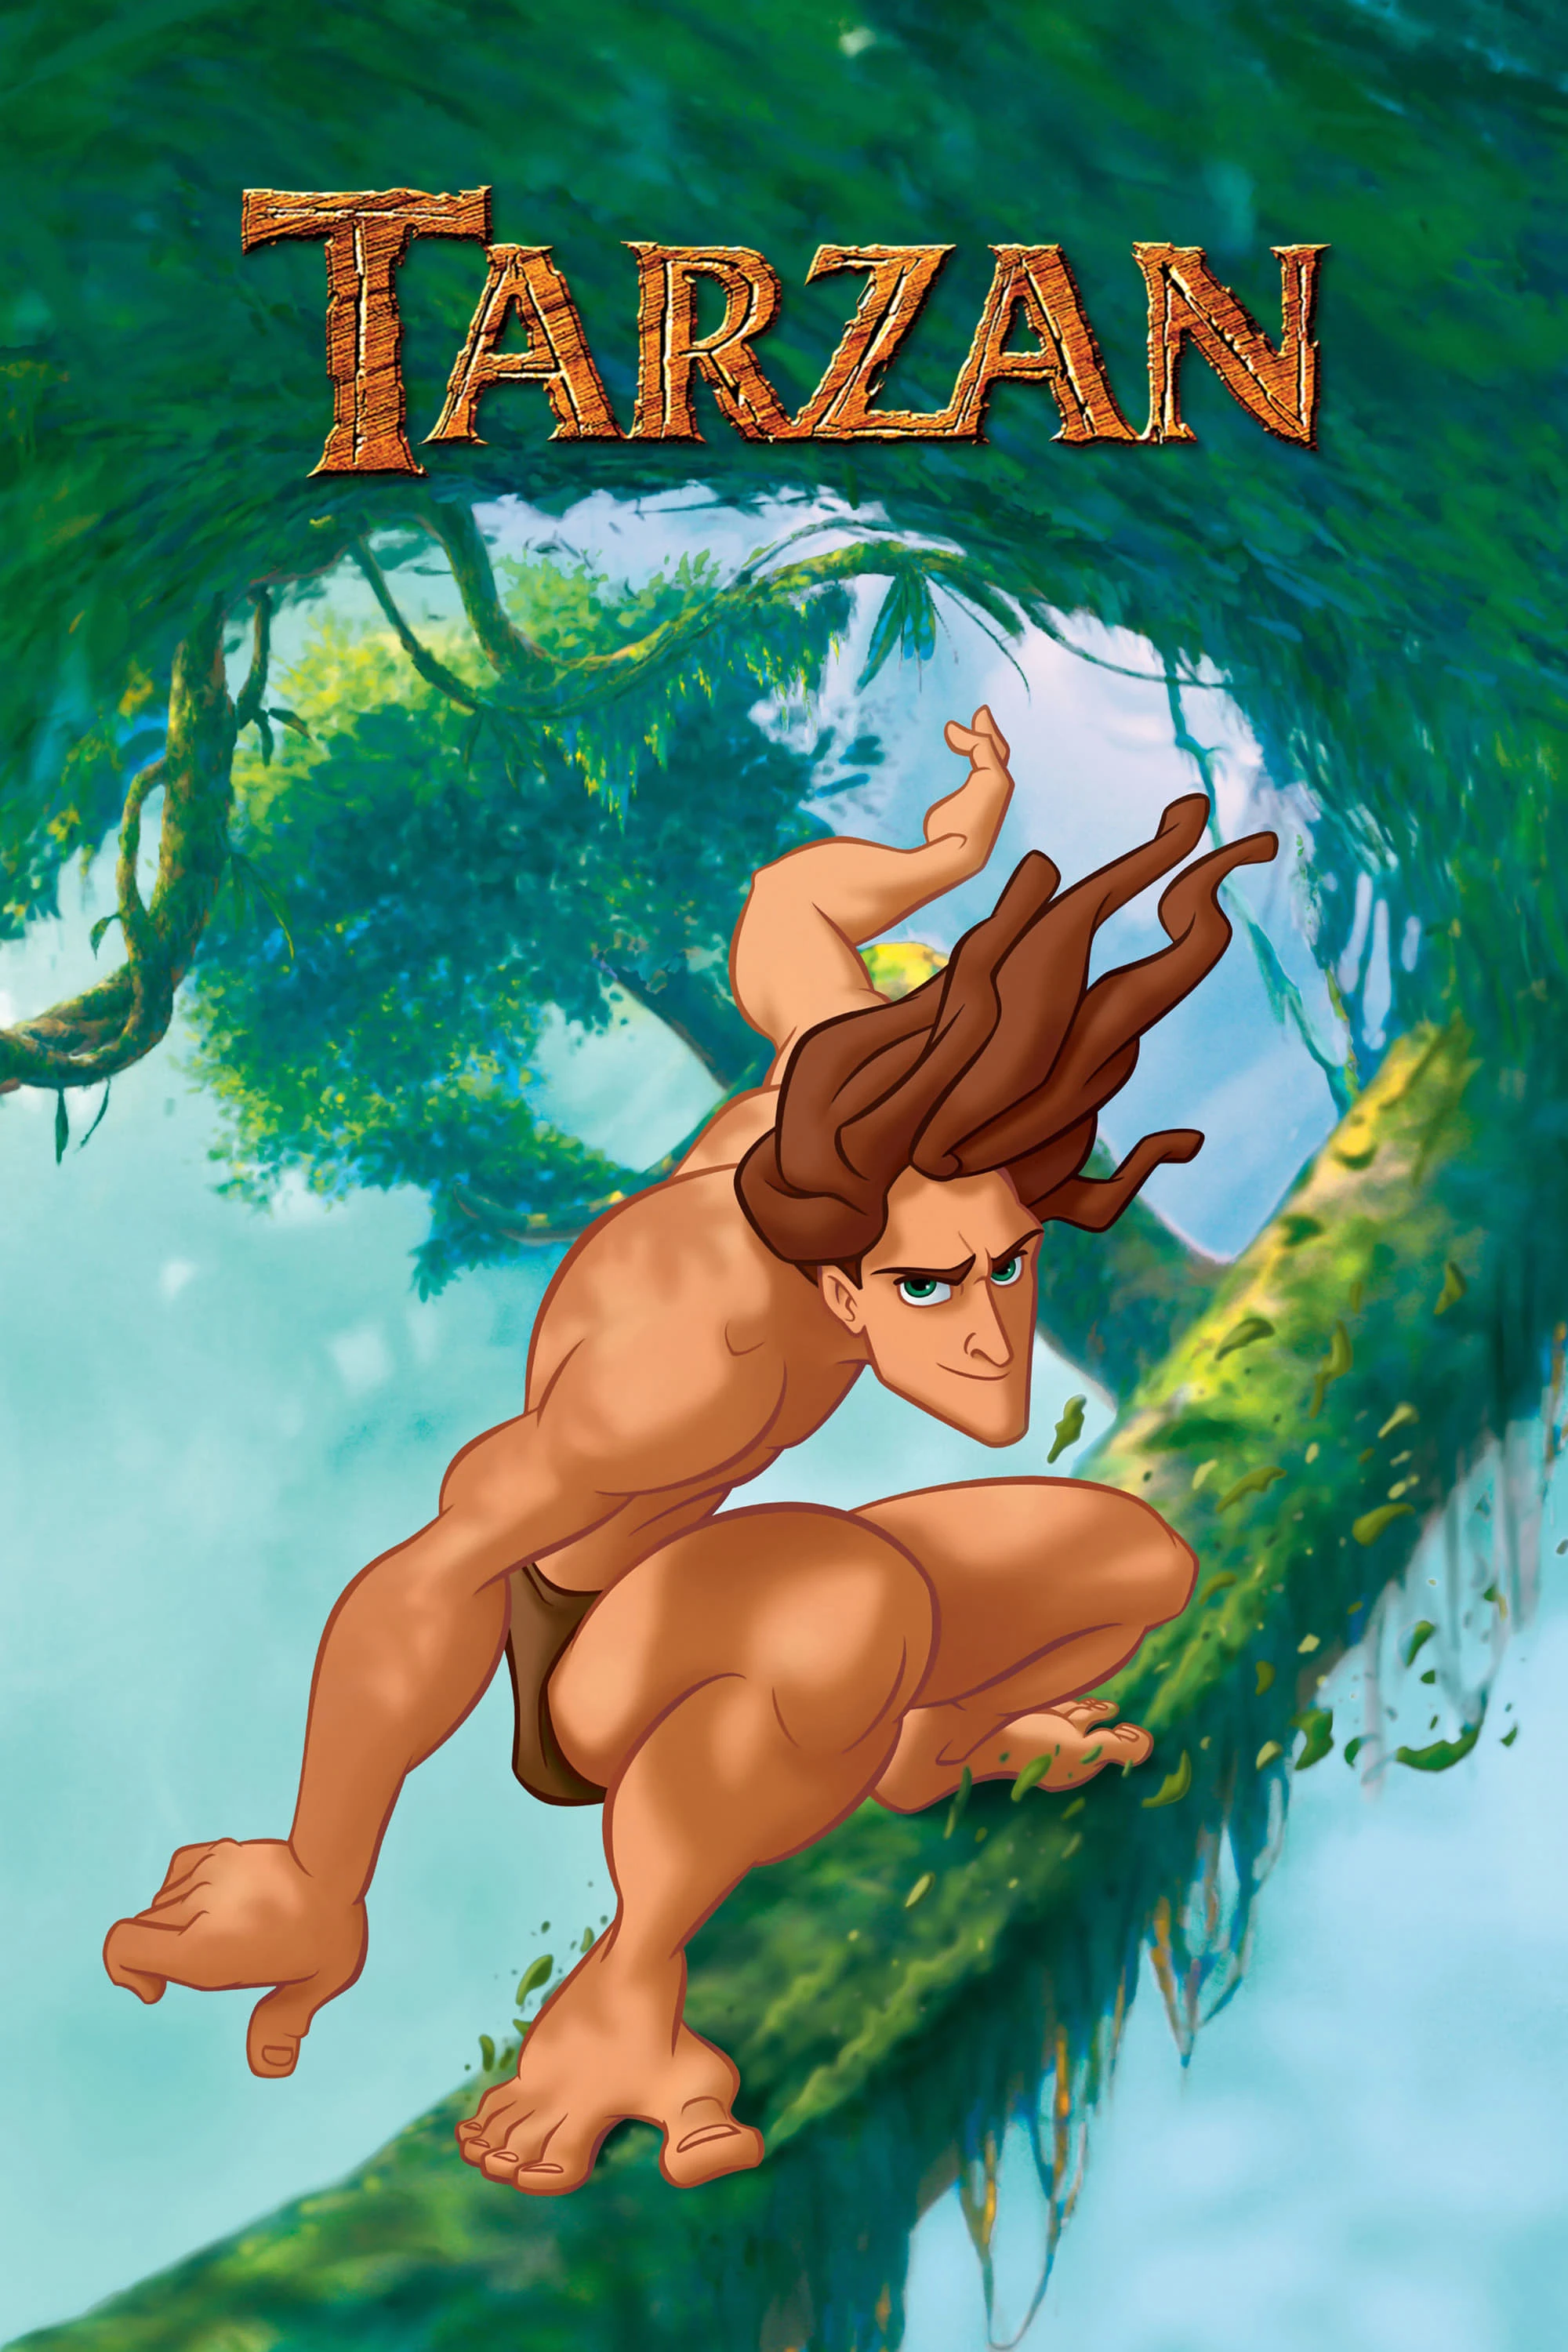 Tarzann | Tarzan (1999)